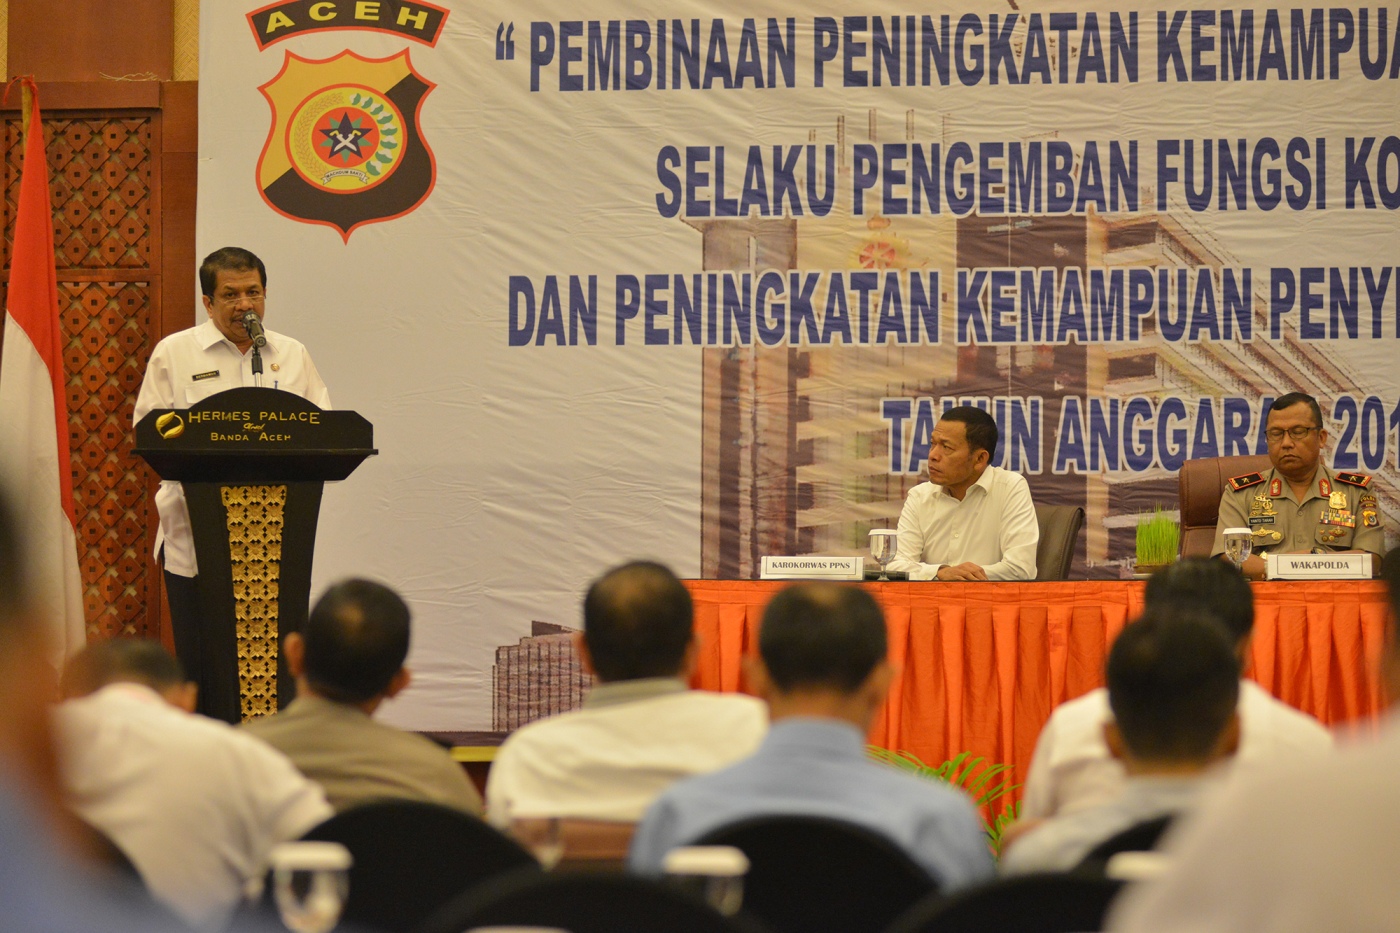 Pemerintah Aceh dukung upaya penguatan kapasitas PPNS Aceh